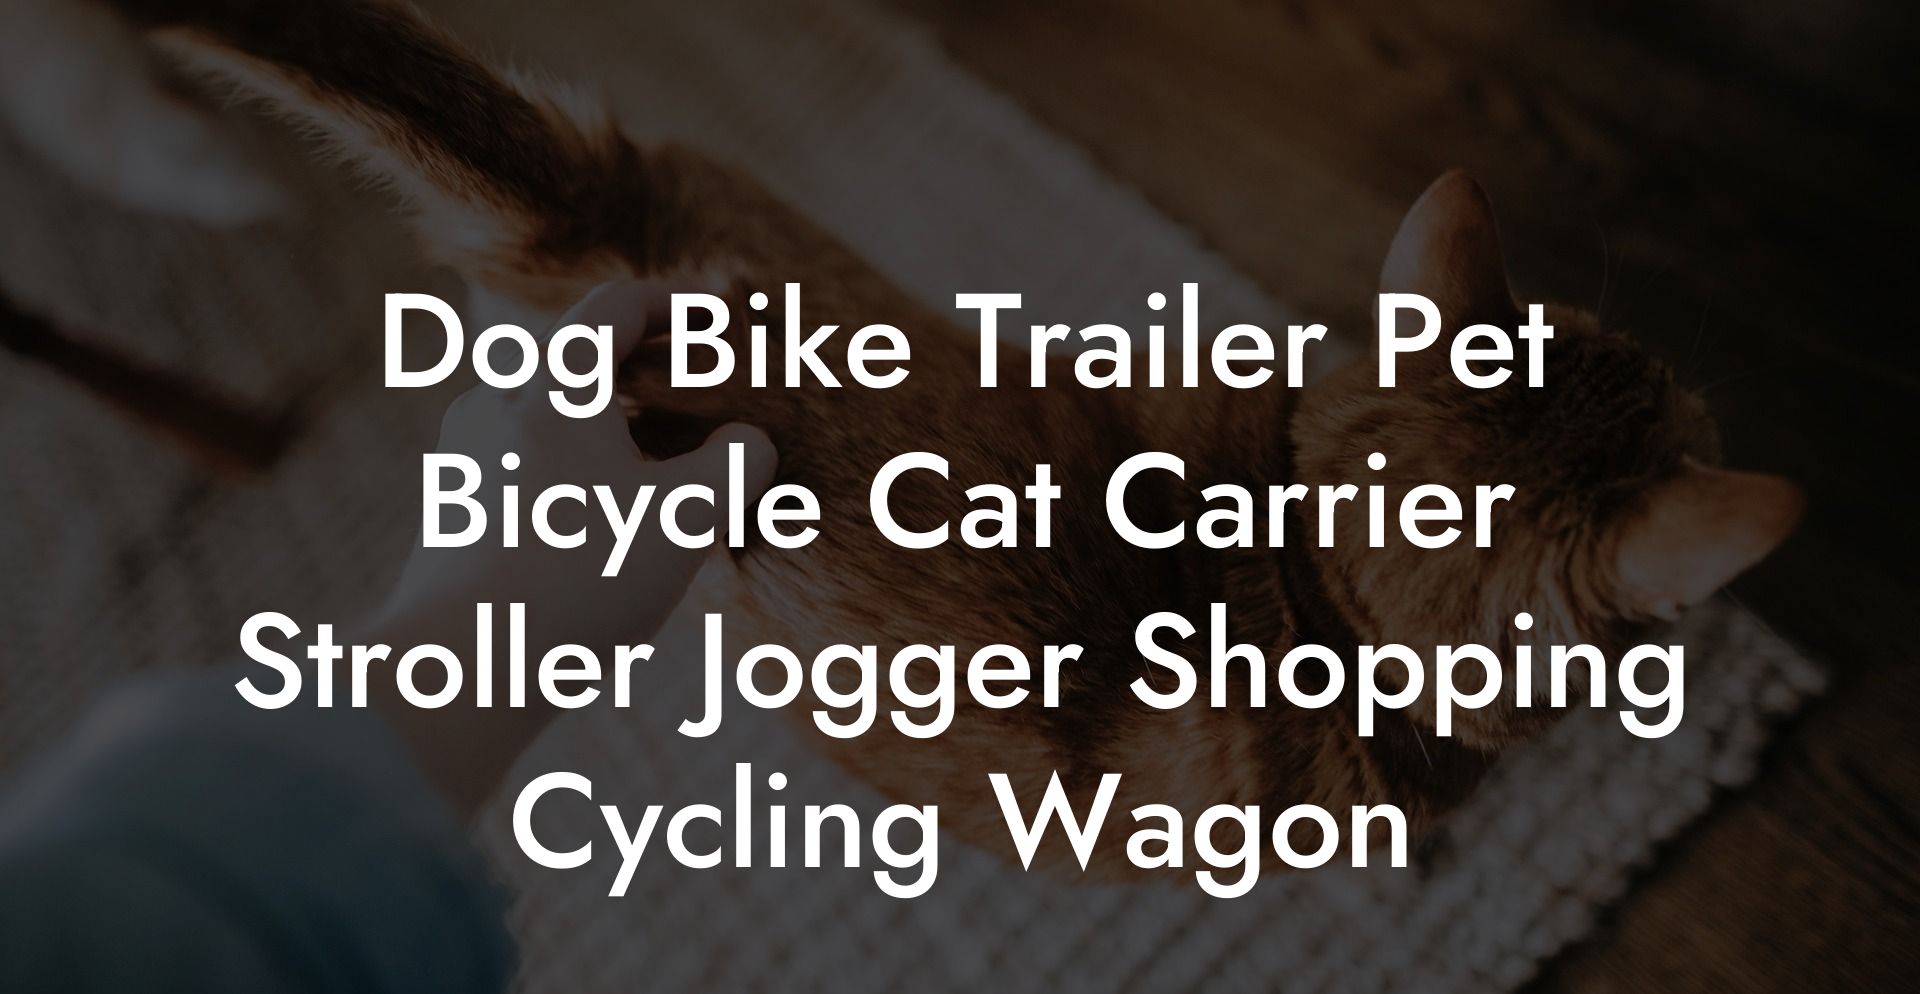 Dog Bike Trailer Pet Bicycle Cat Carrier Stroller Jogger Shopping Cycling Wagon